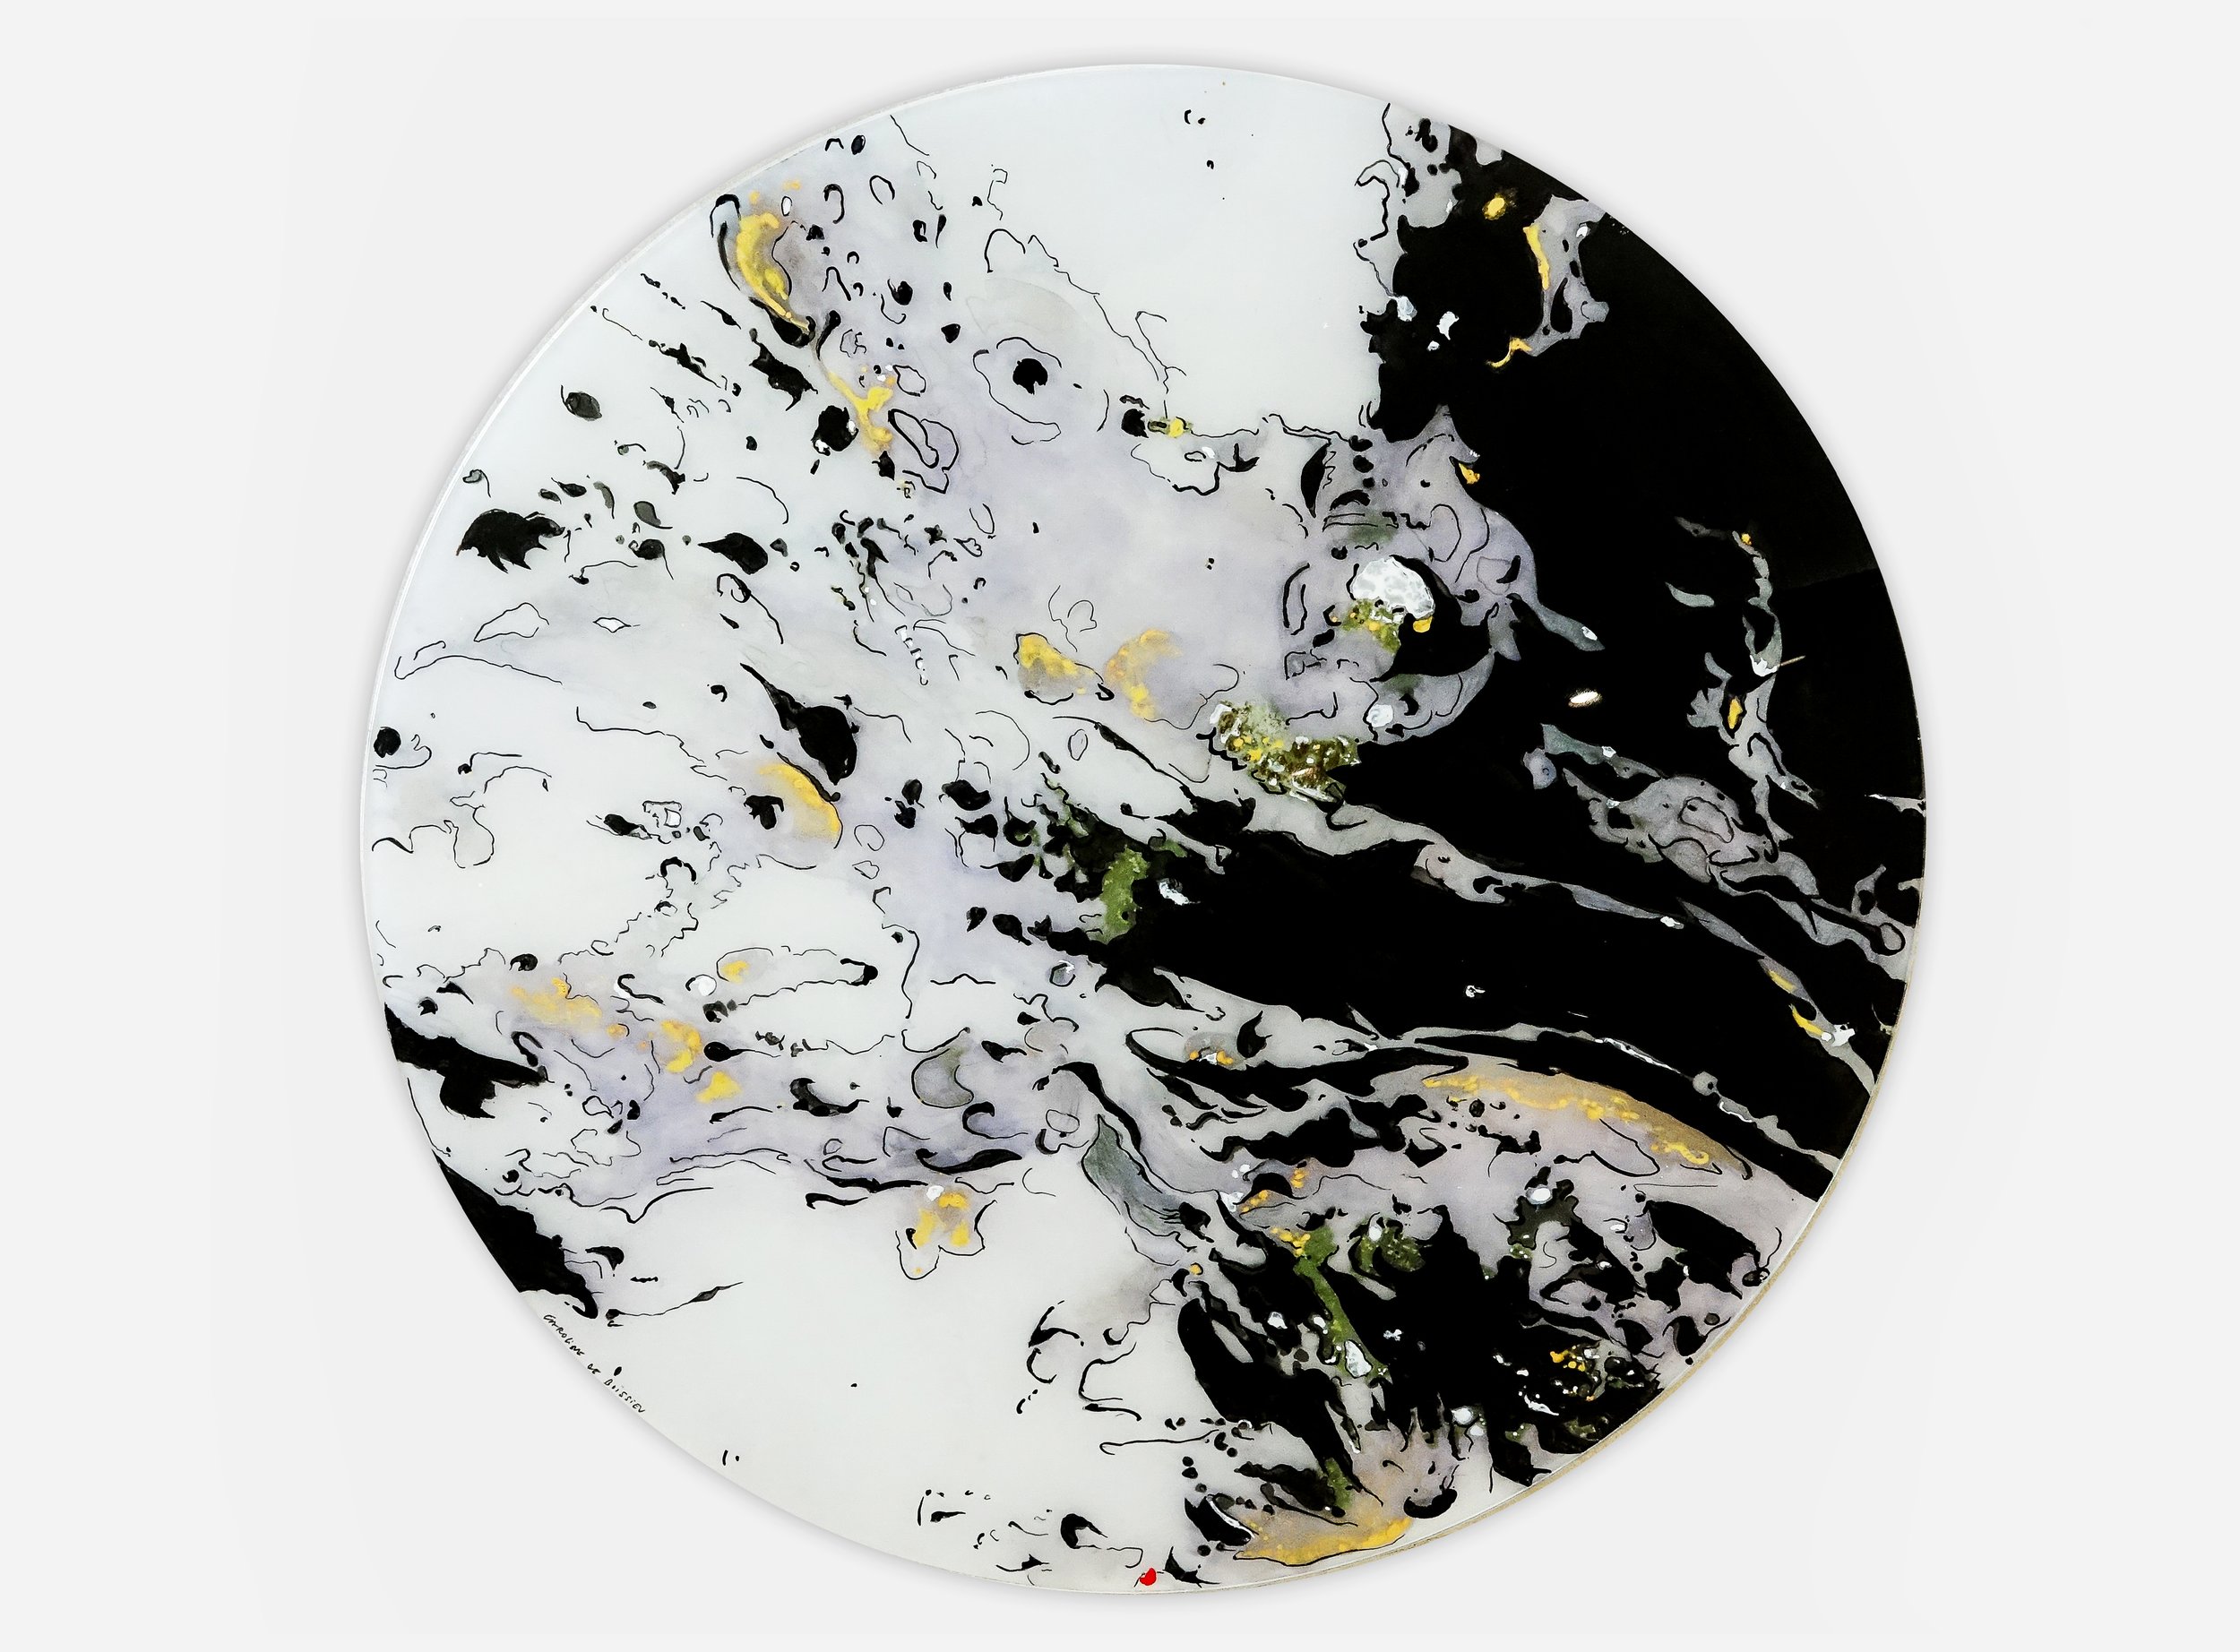 Caroline de Boissieu, Gaia, 2020, Mixed media on laminated art glass, 83 x 83 cm.